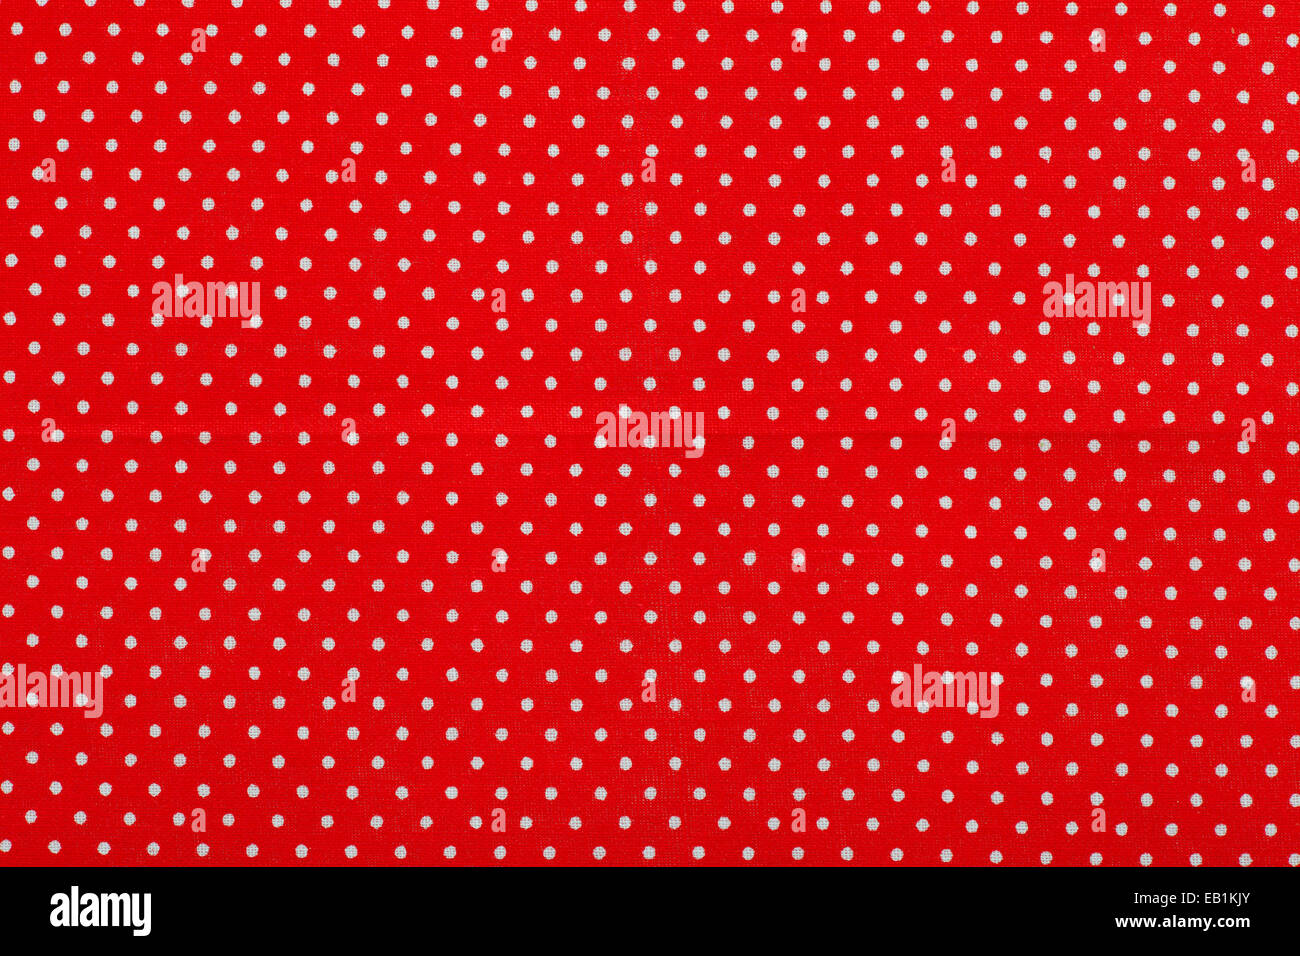 red polka dot fabric pattern Stock Photo